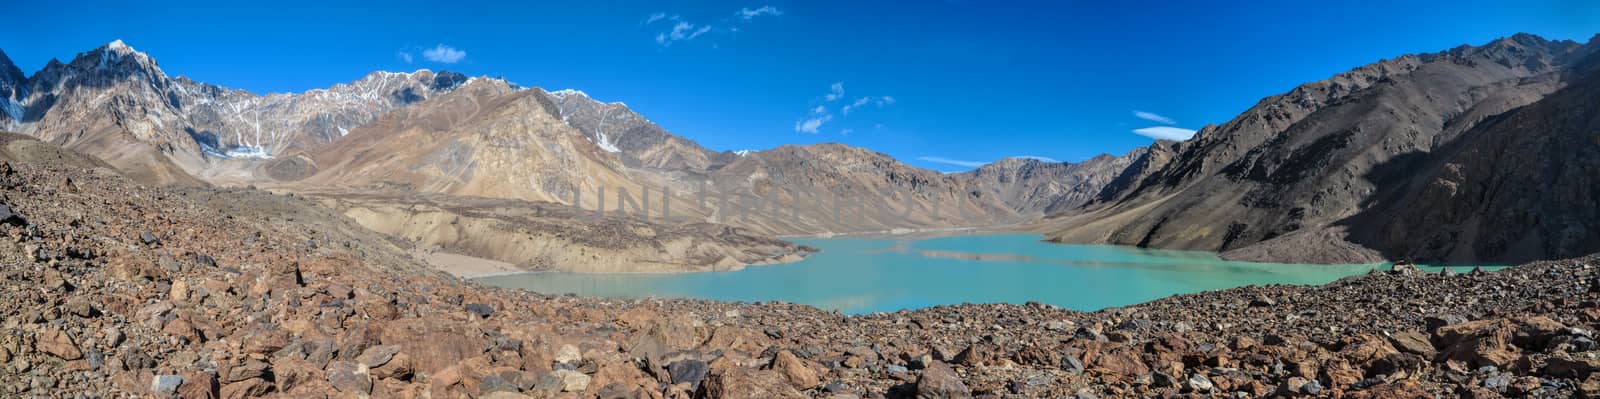 Tajikistan turquoise lake panorama by MichalKnitl